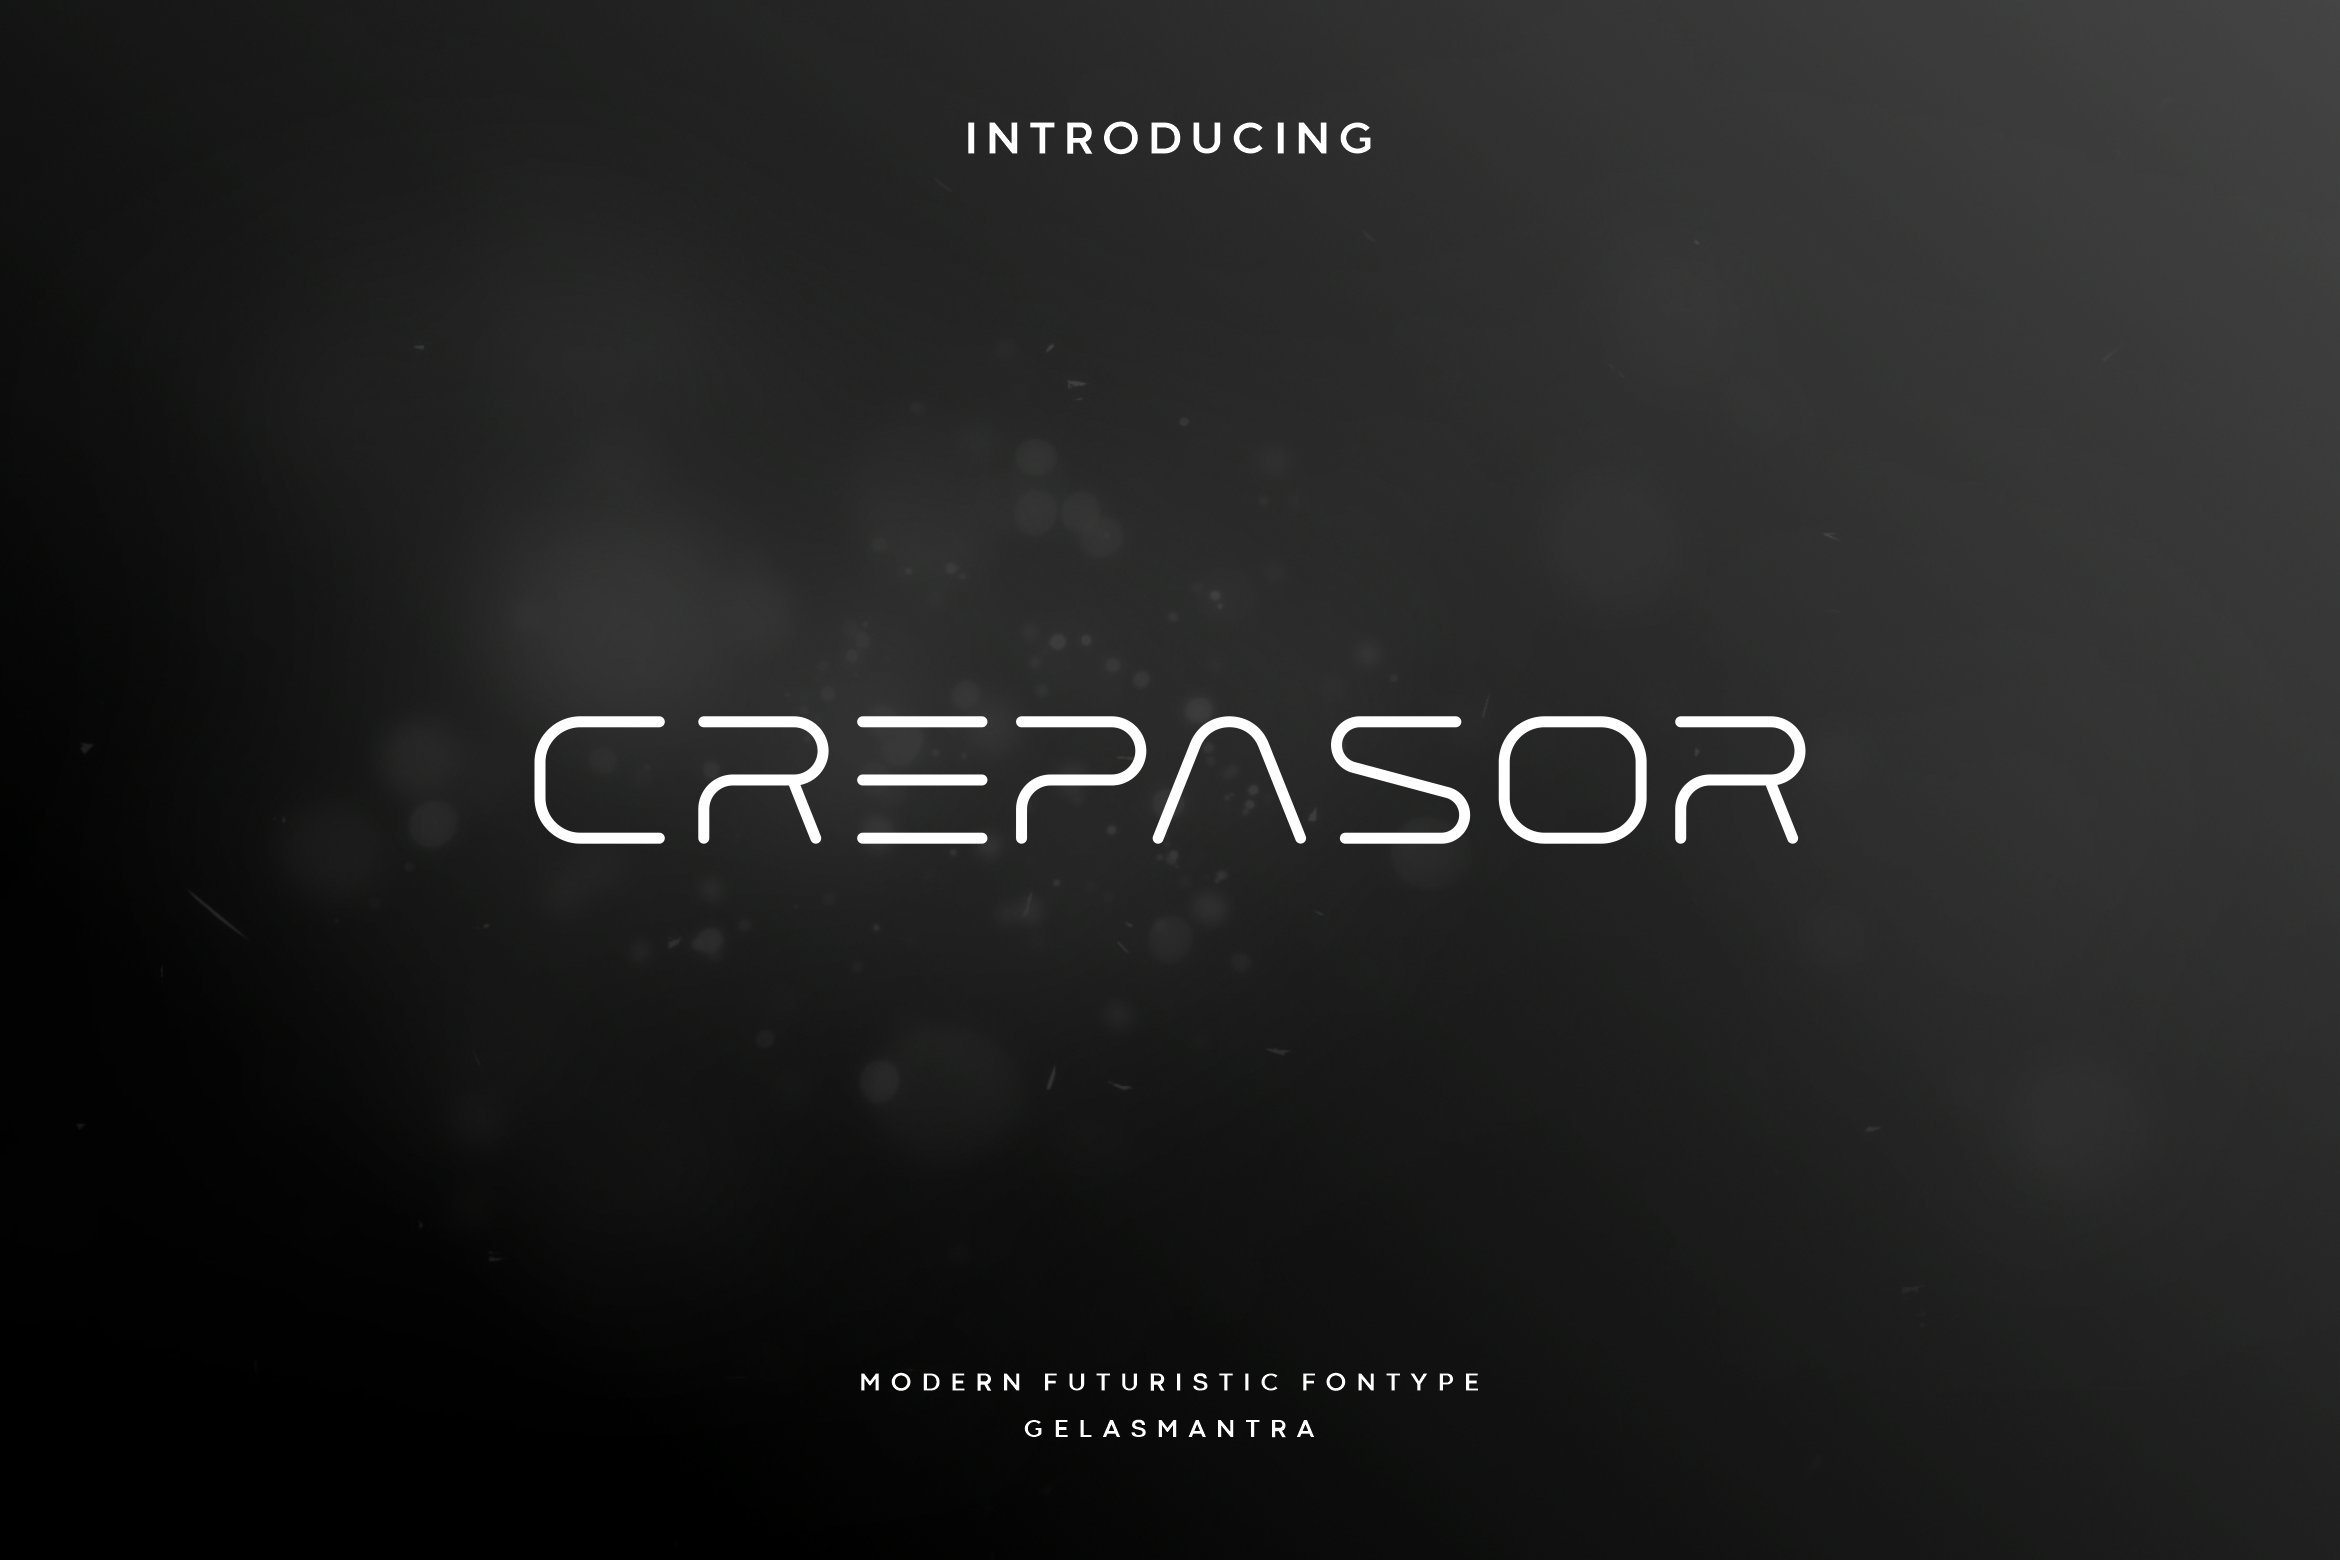 Crepasor cover image.